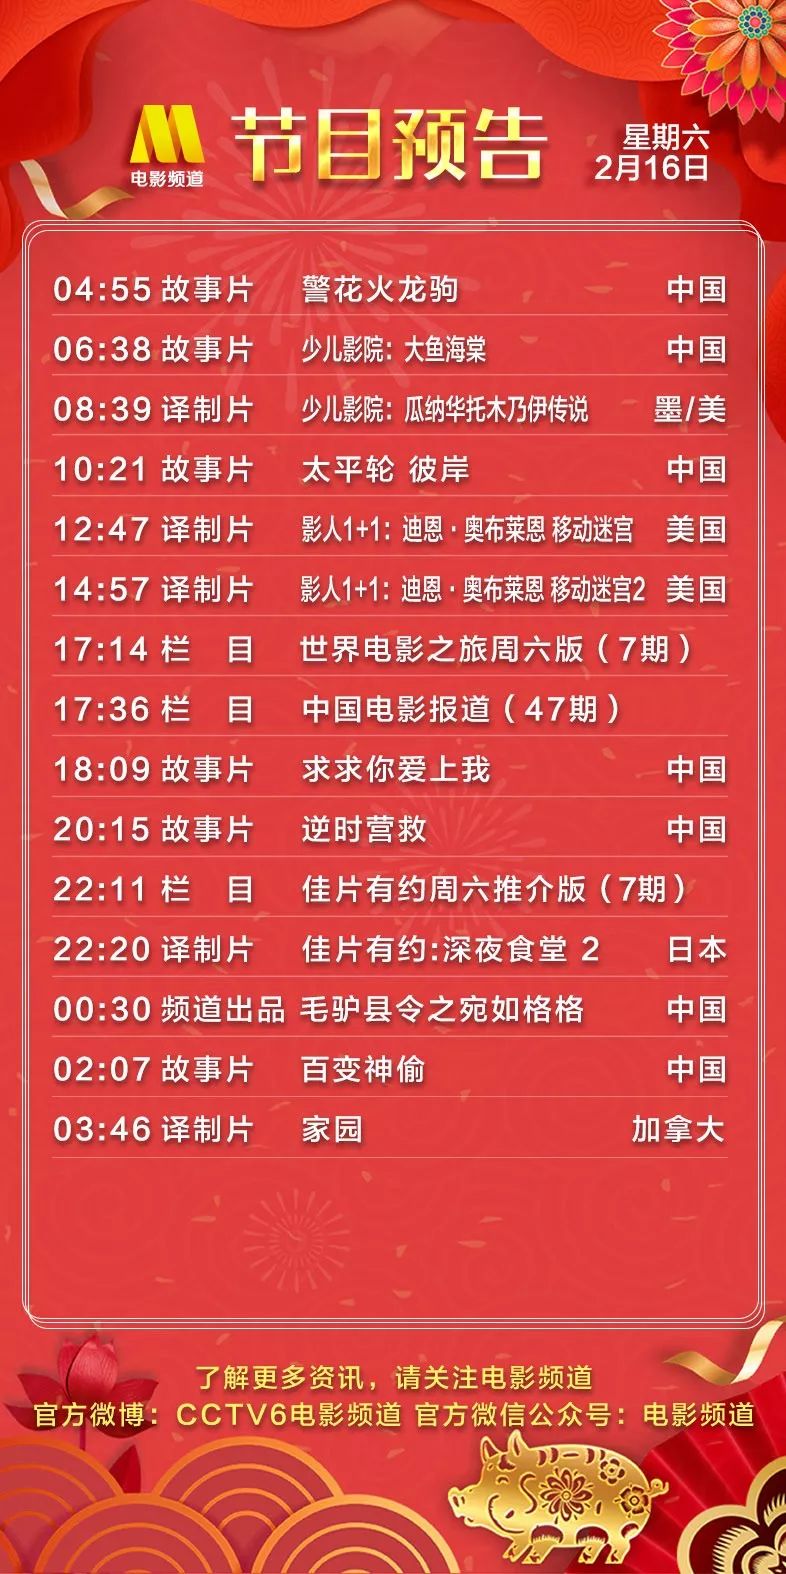 2月16日 星期六 CCTV6节目预告 